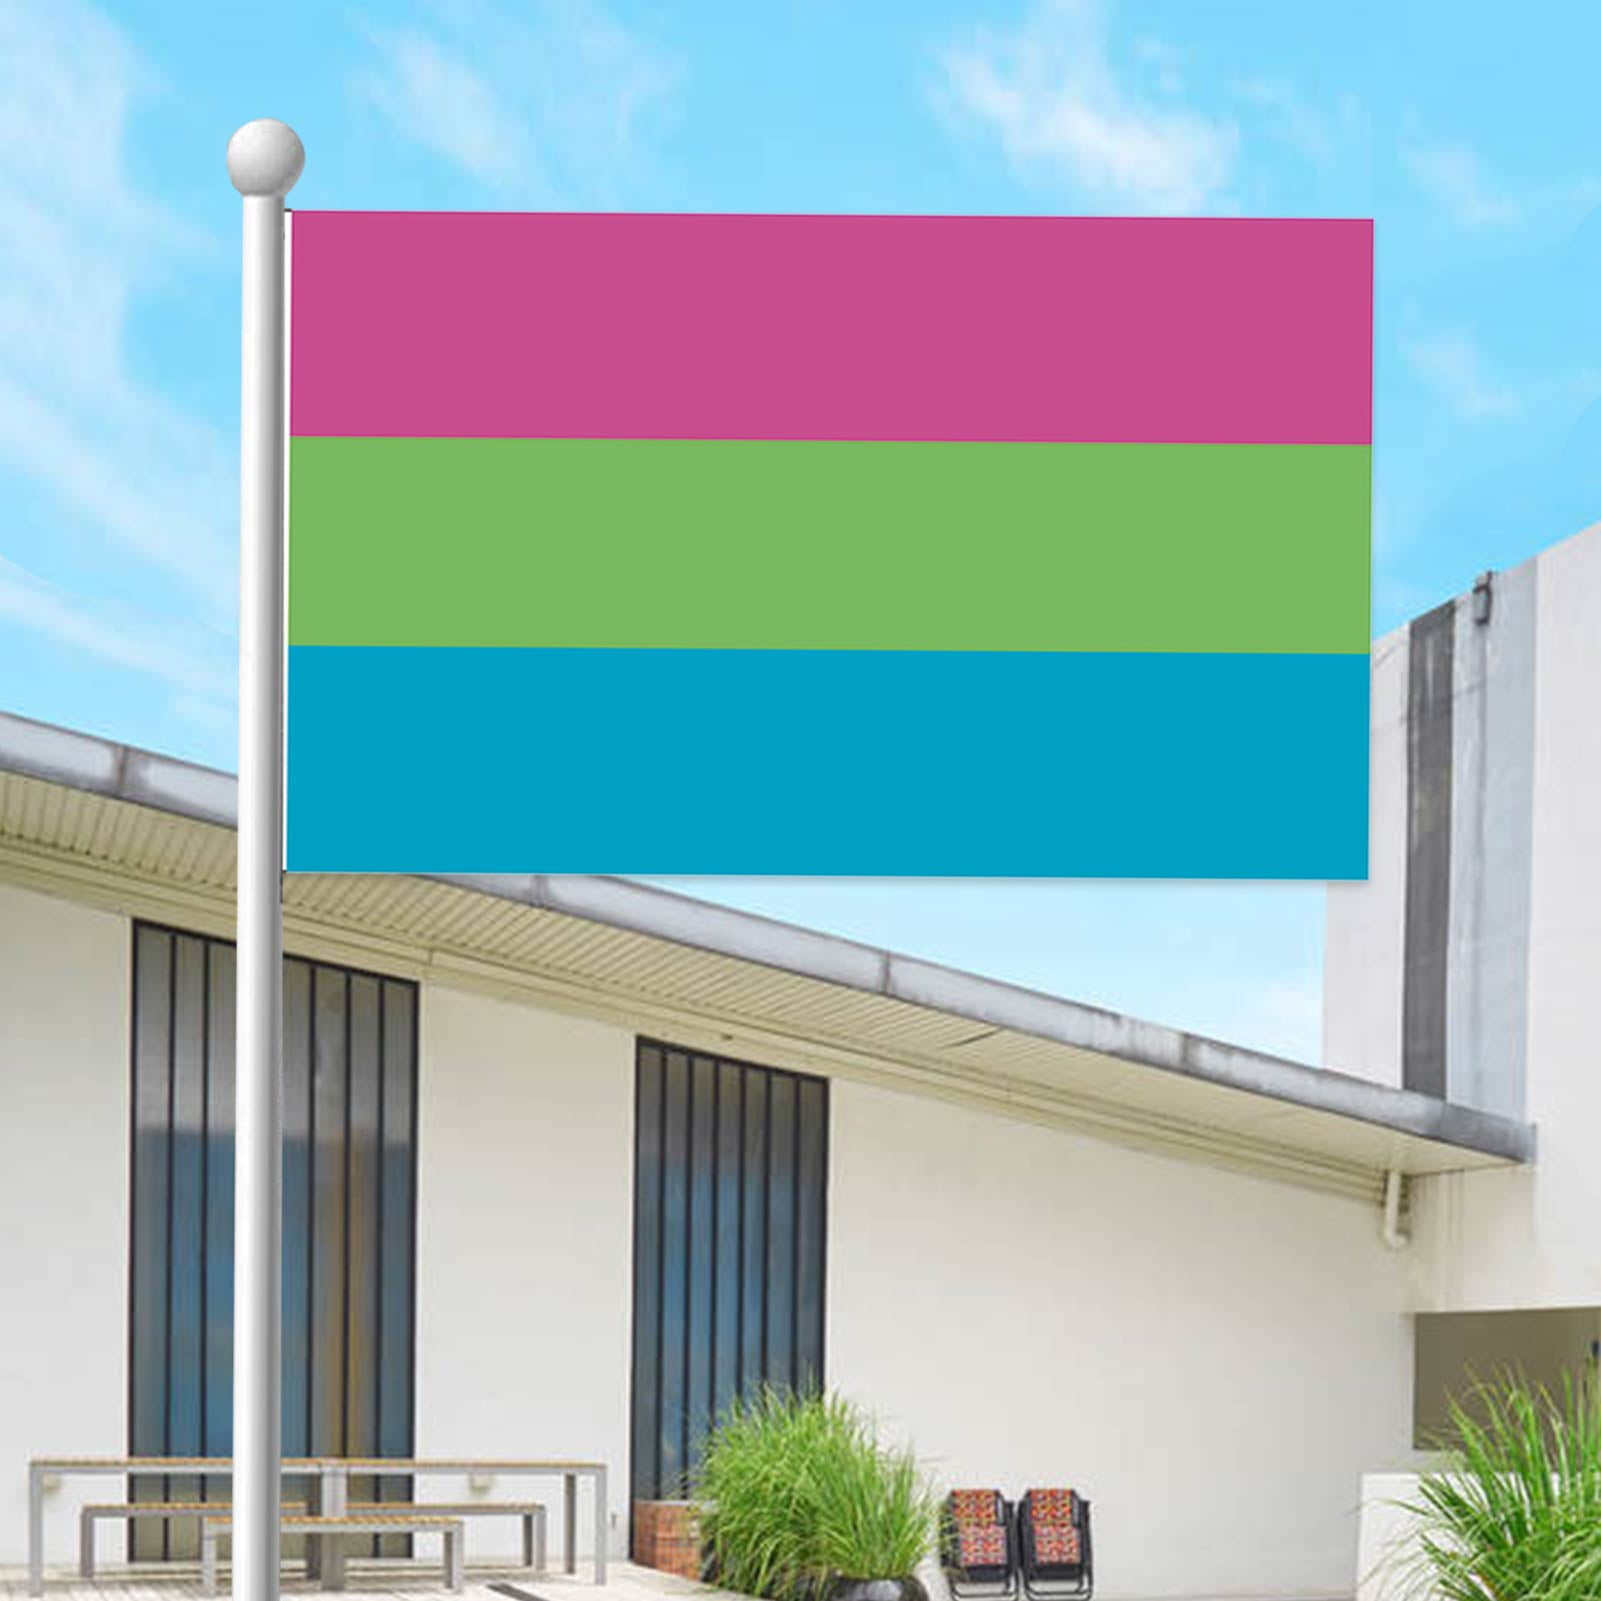 Rainbow Cloud Durable Vivid Yard Garden Flags Seasonal Home Decorative for Indoor Outdoor 3x5 ft